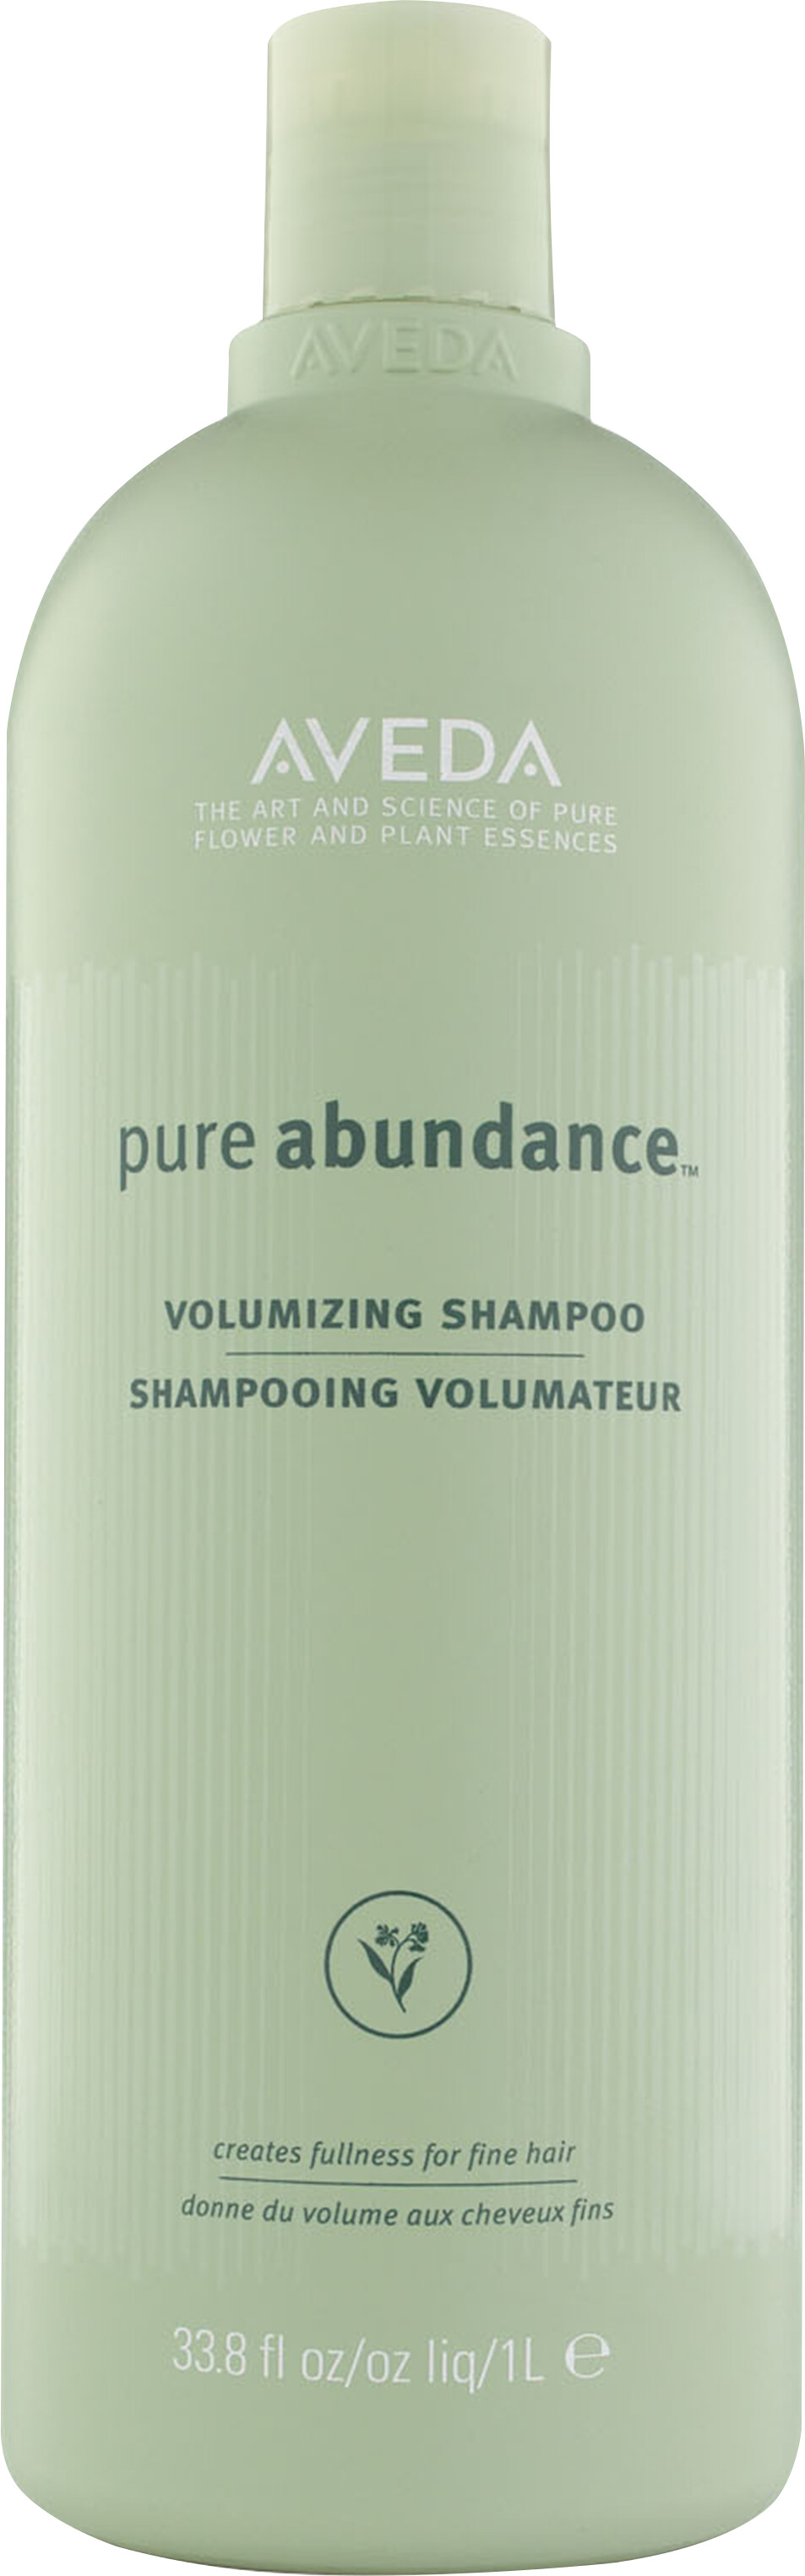 Aveda Pure Abundance Volumizing Shampoo 1 litre